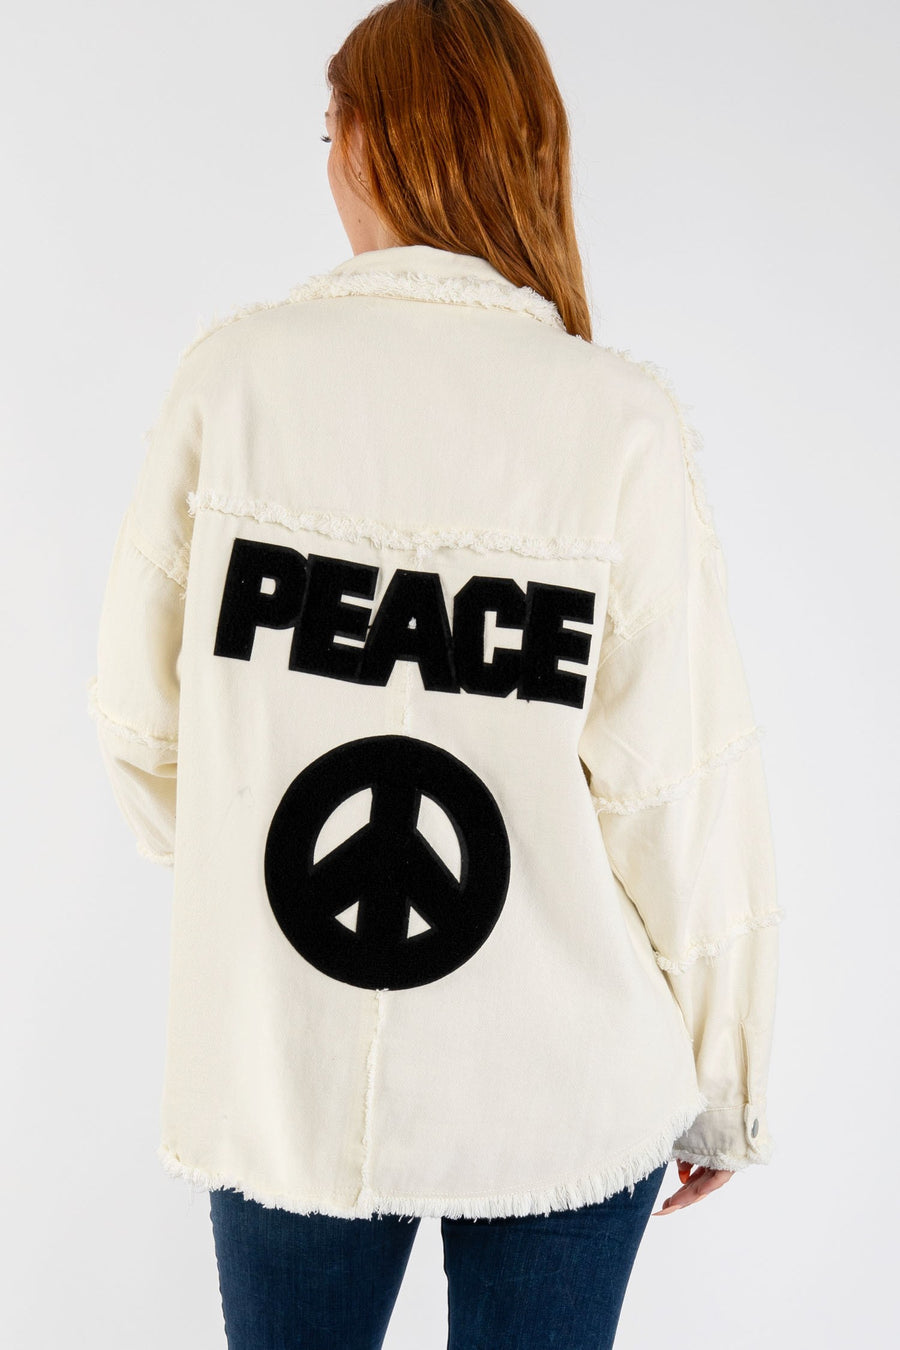 Peace Patch Jacket